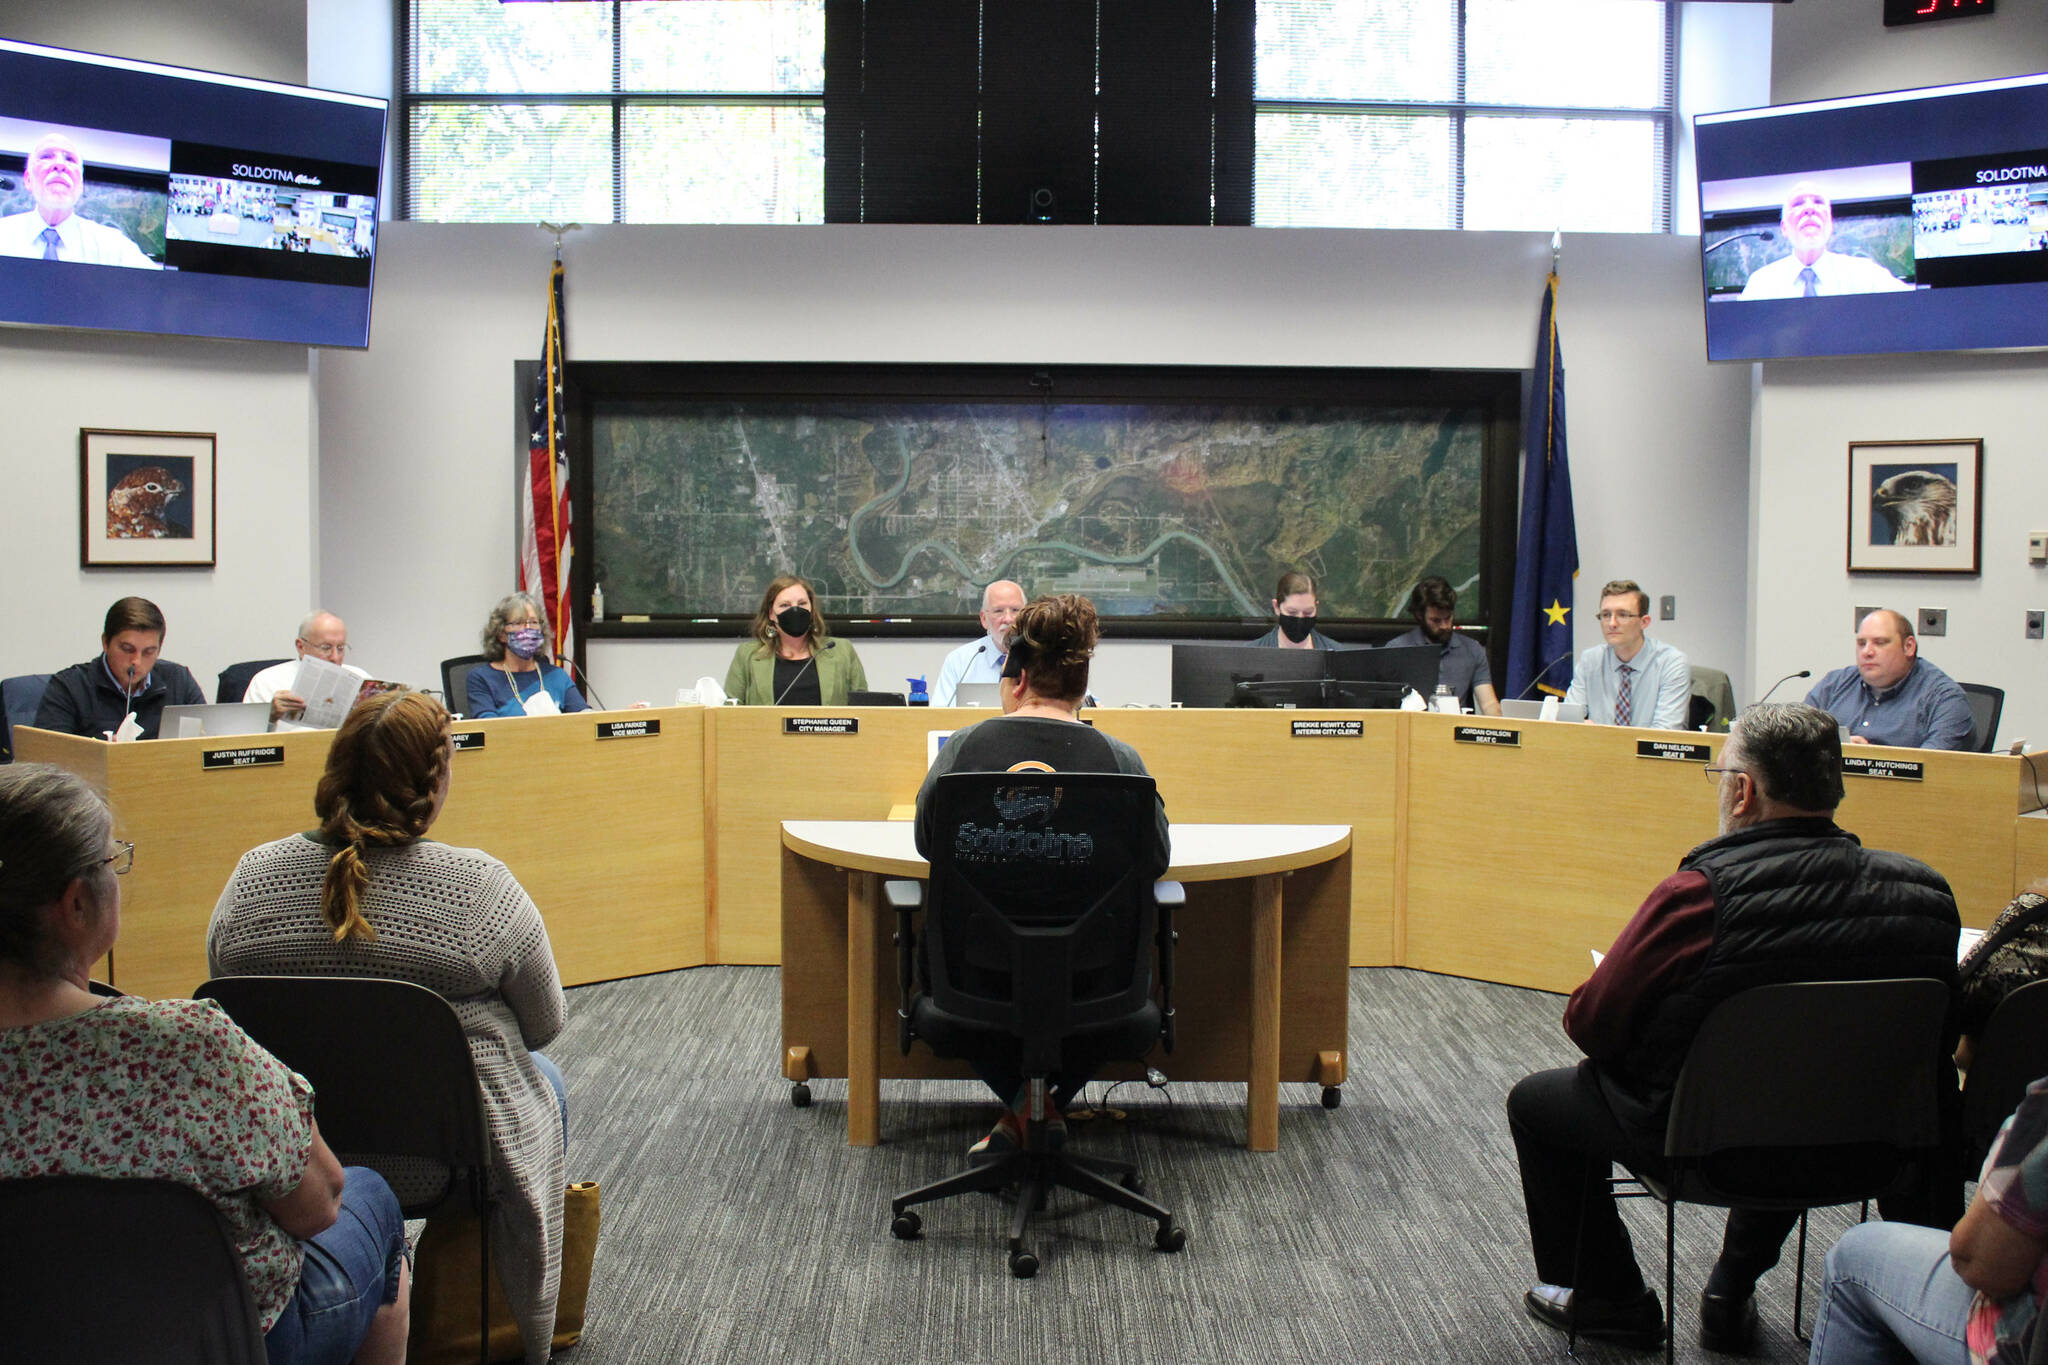 Soldotna Chamber of Commerce Executive Director Shanon Davis presents a quarterly update to the Soldotna City Council on Wednesday, Aug. 24, 2022 in Soldotna, Alaska. (Ashlyn O’Hara/Peninsula Clarion)